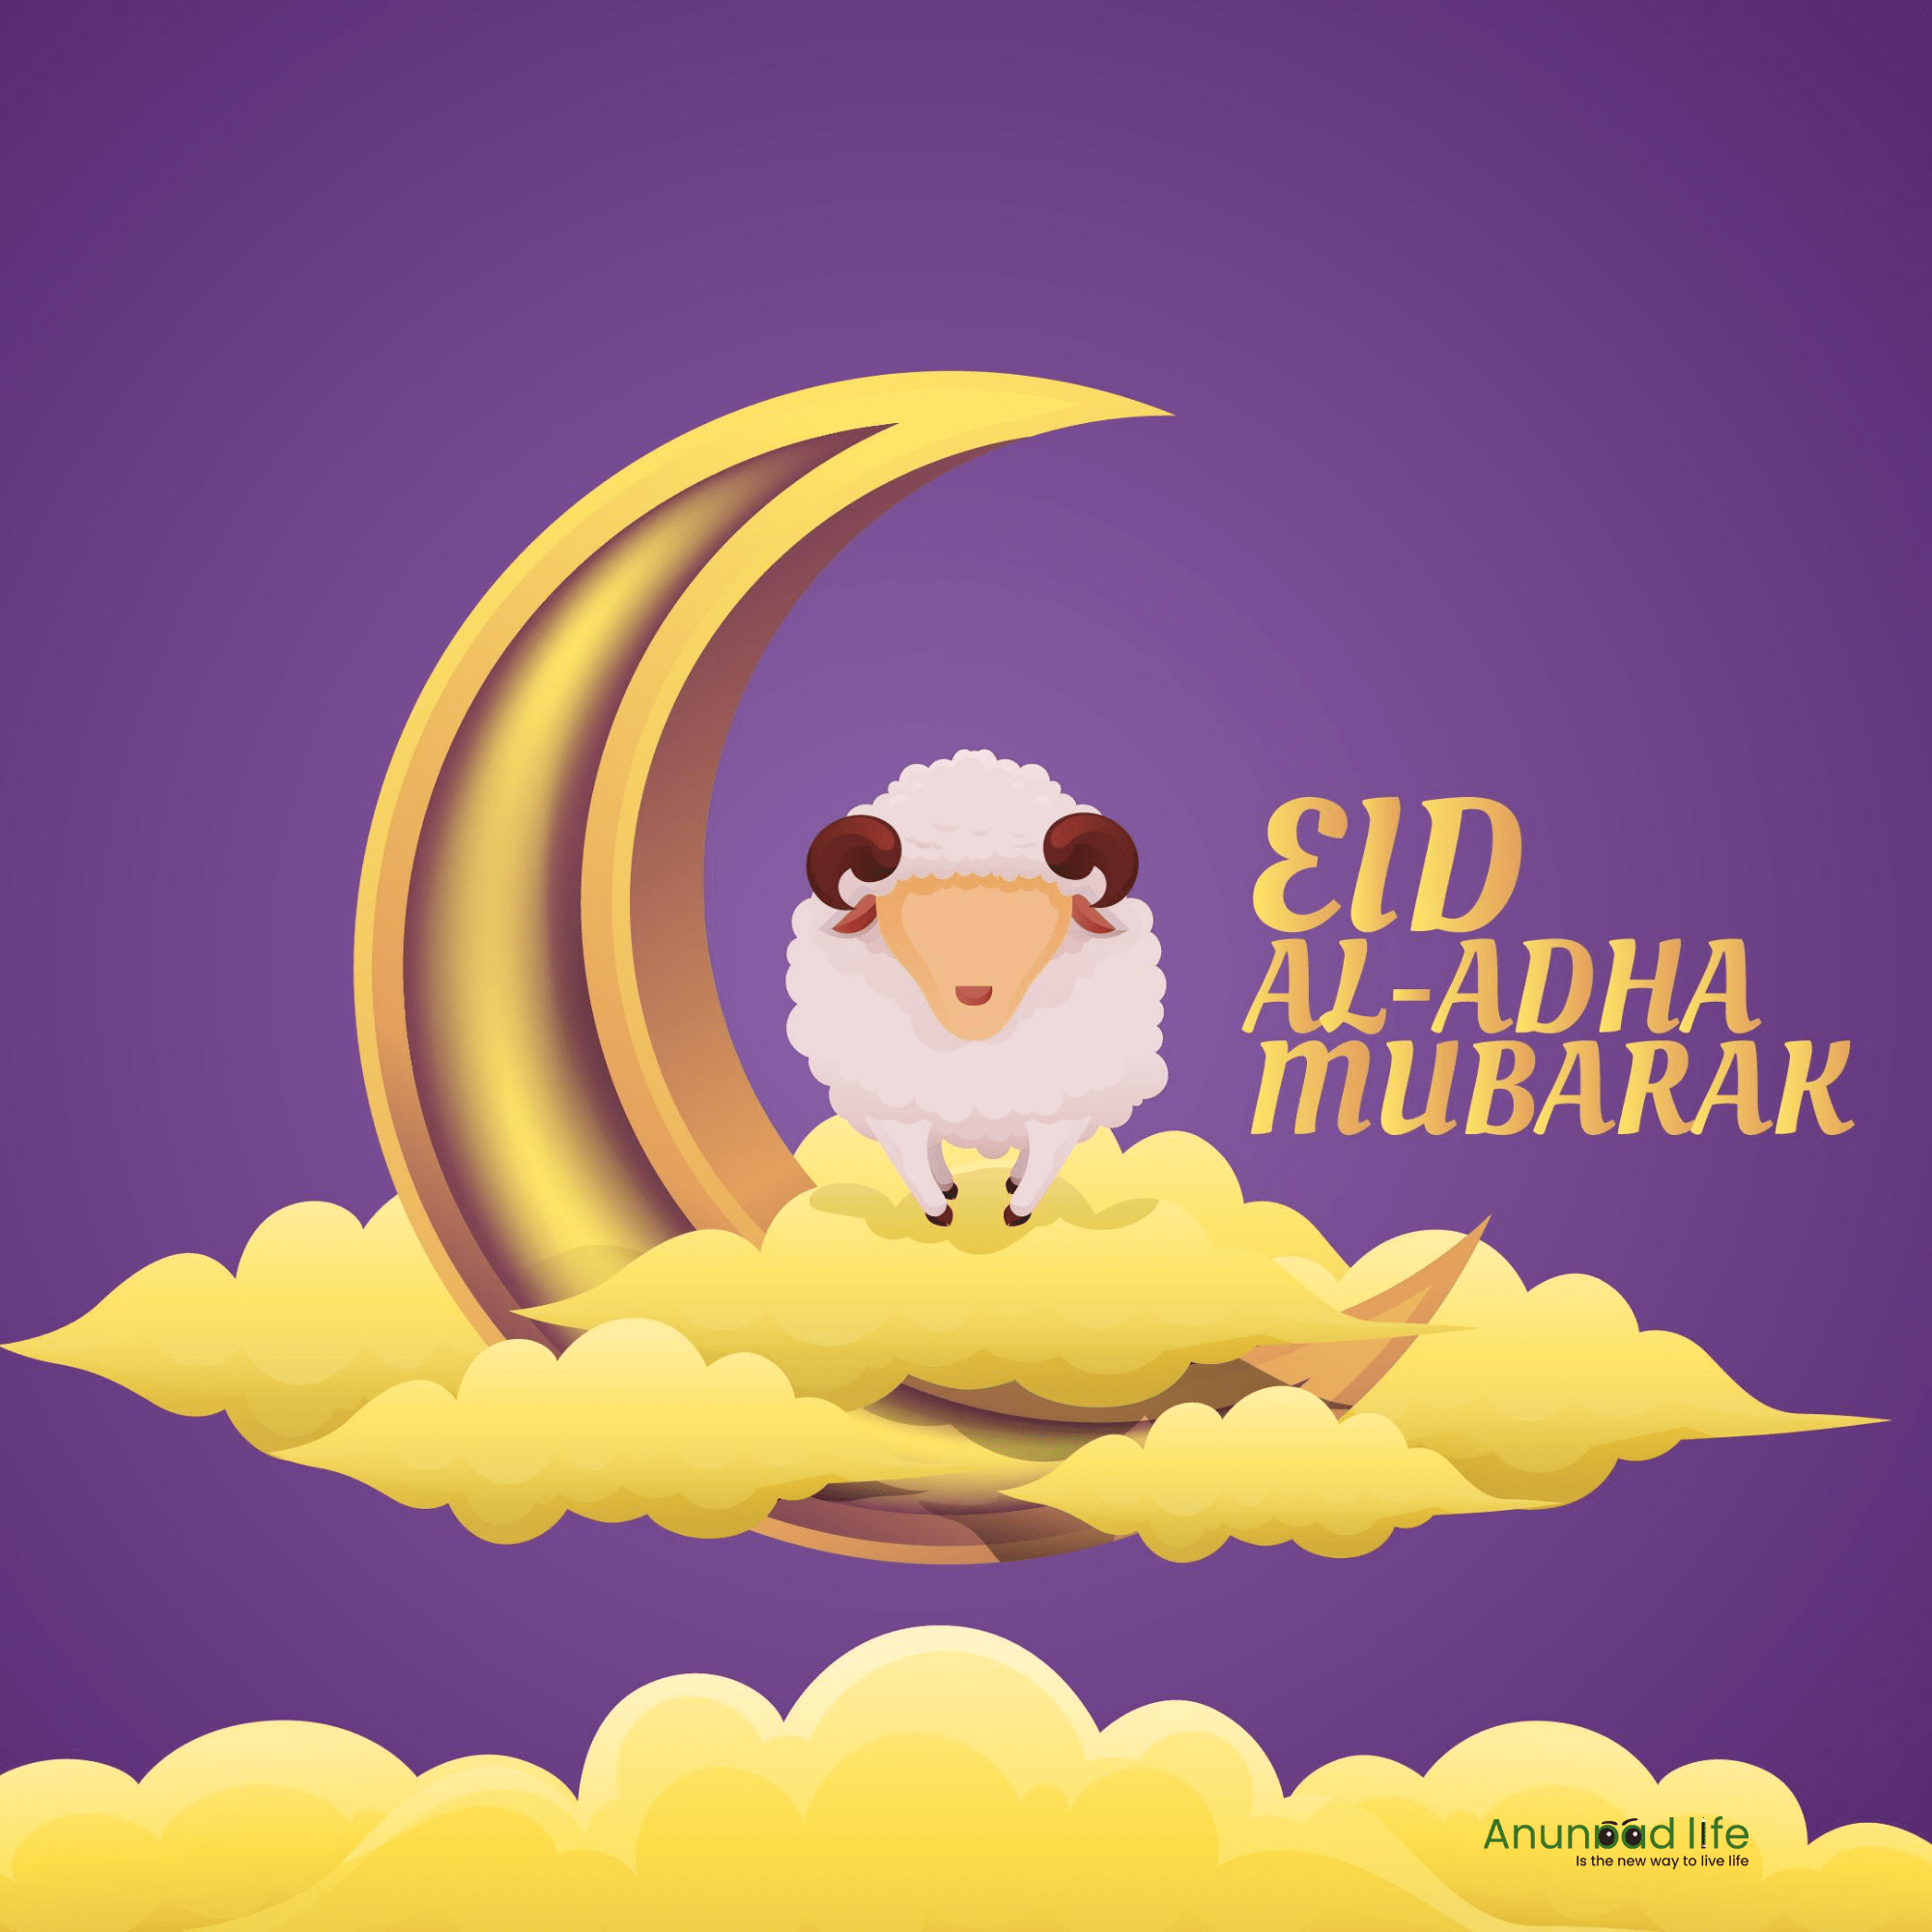 Eid al adha images